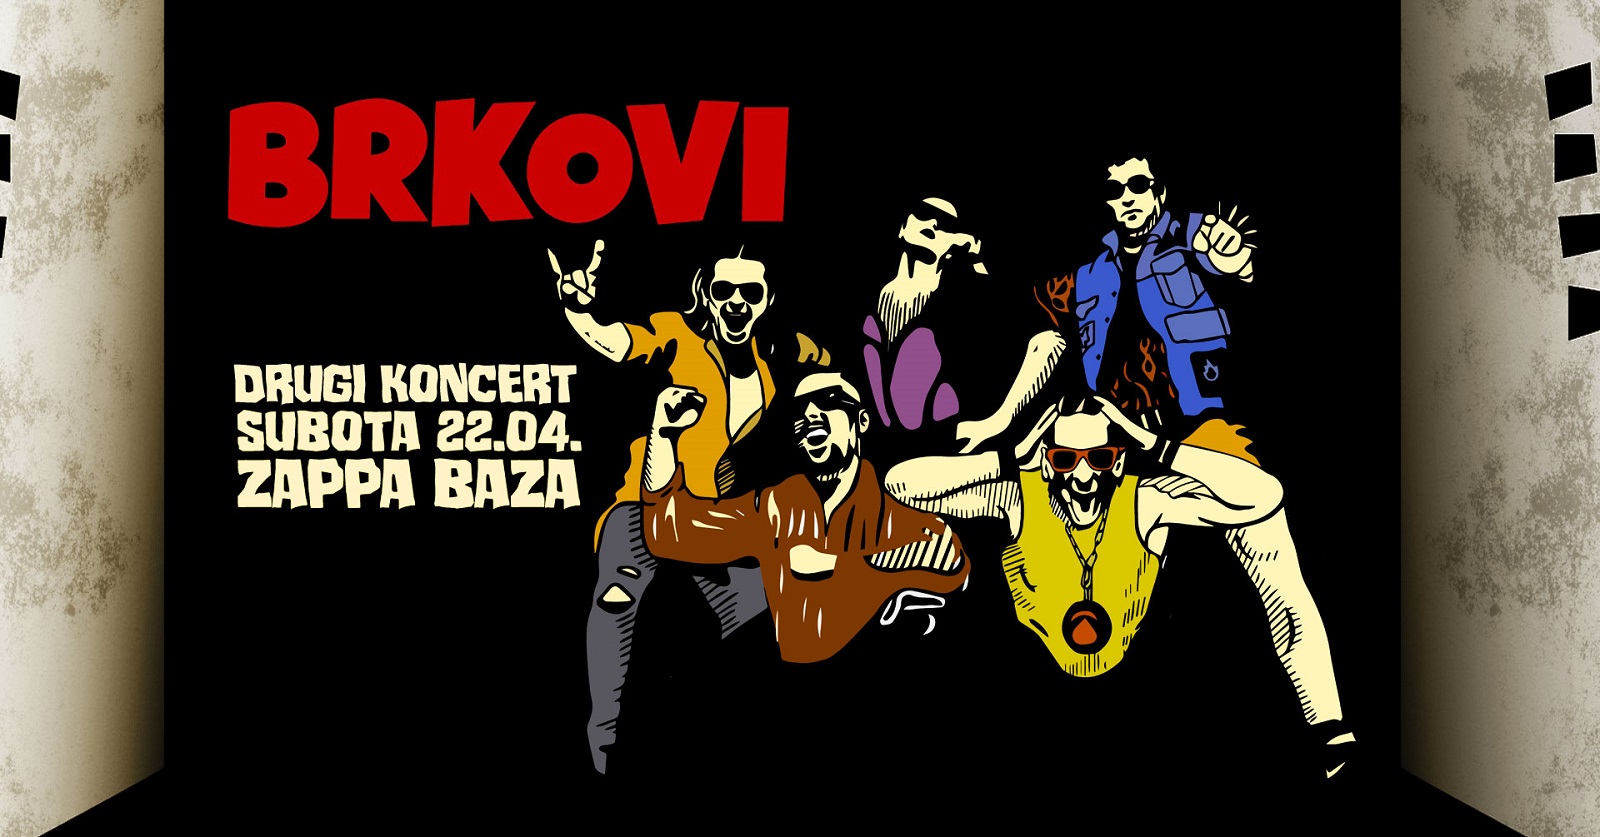 Brkovi rasprodali koncert u Beogradu, drugi punk-folk wellness tretman 22. aprila